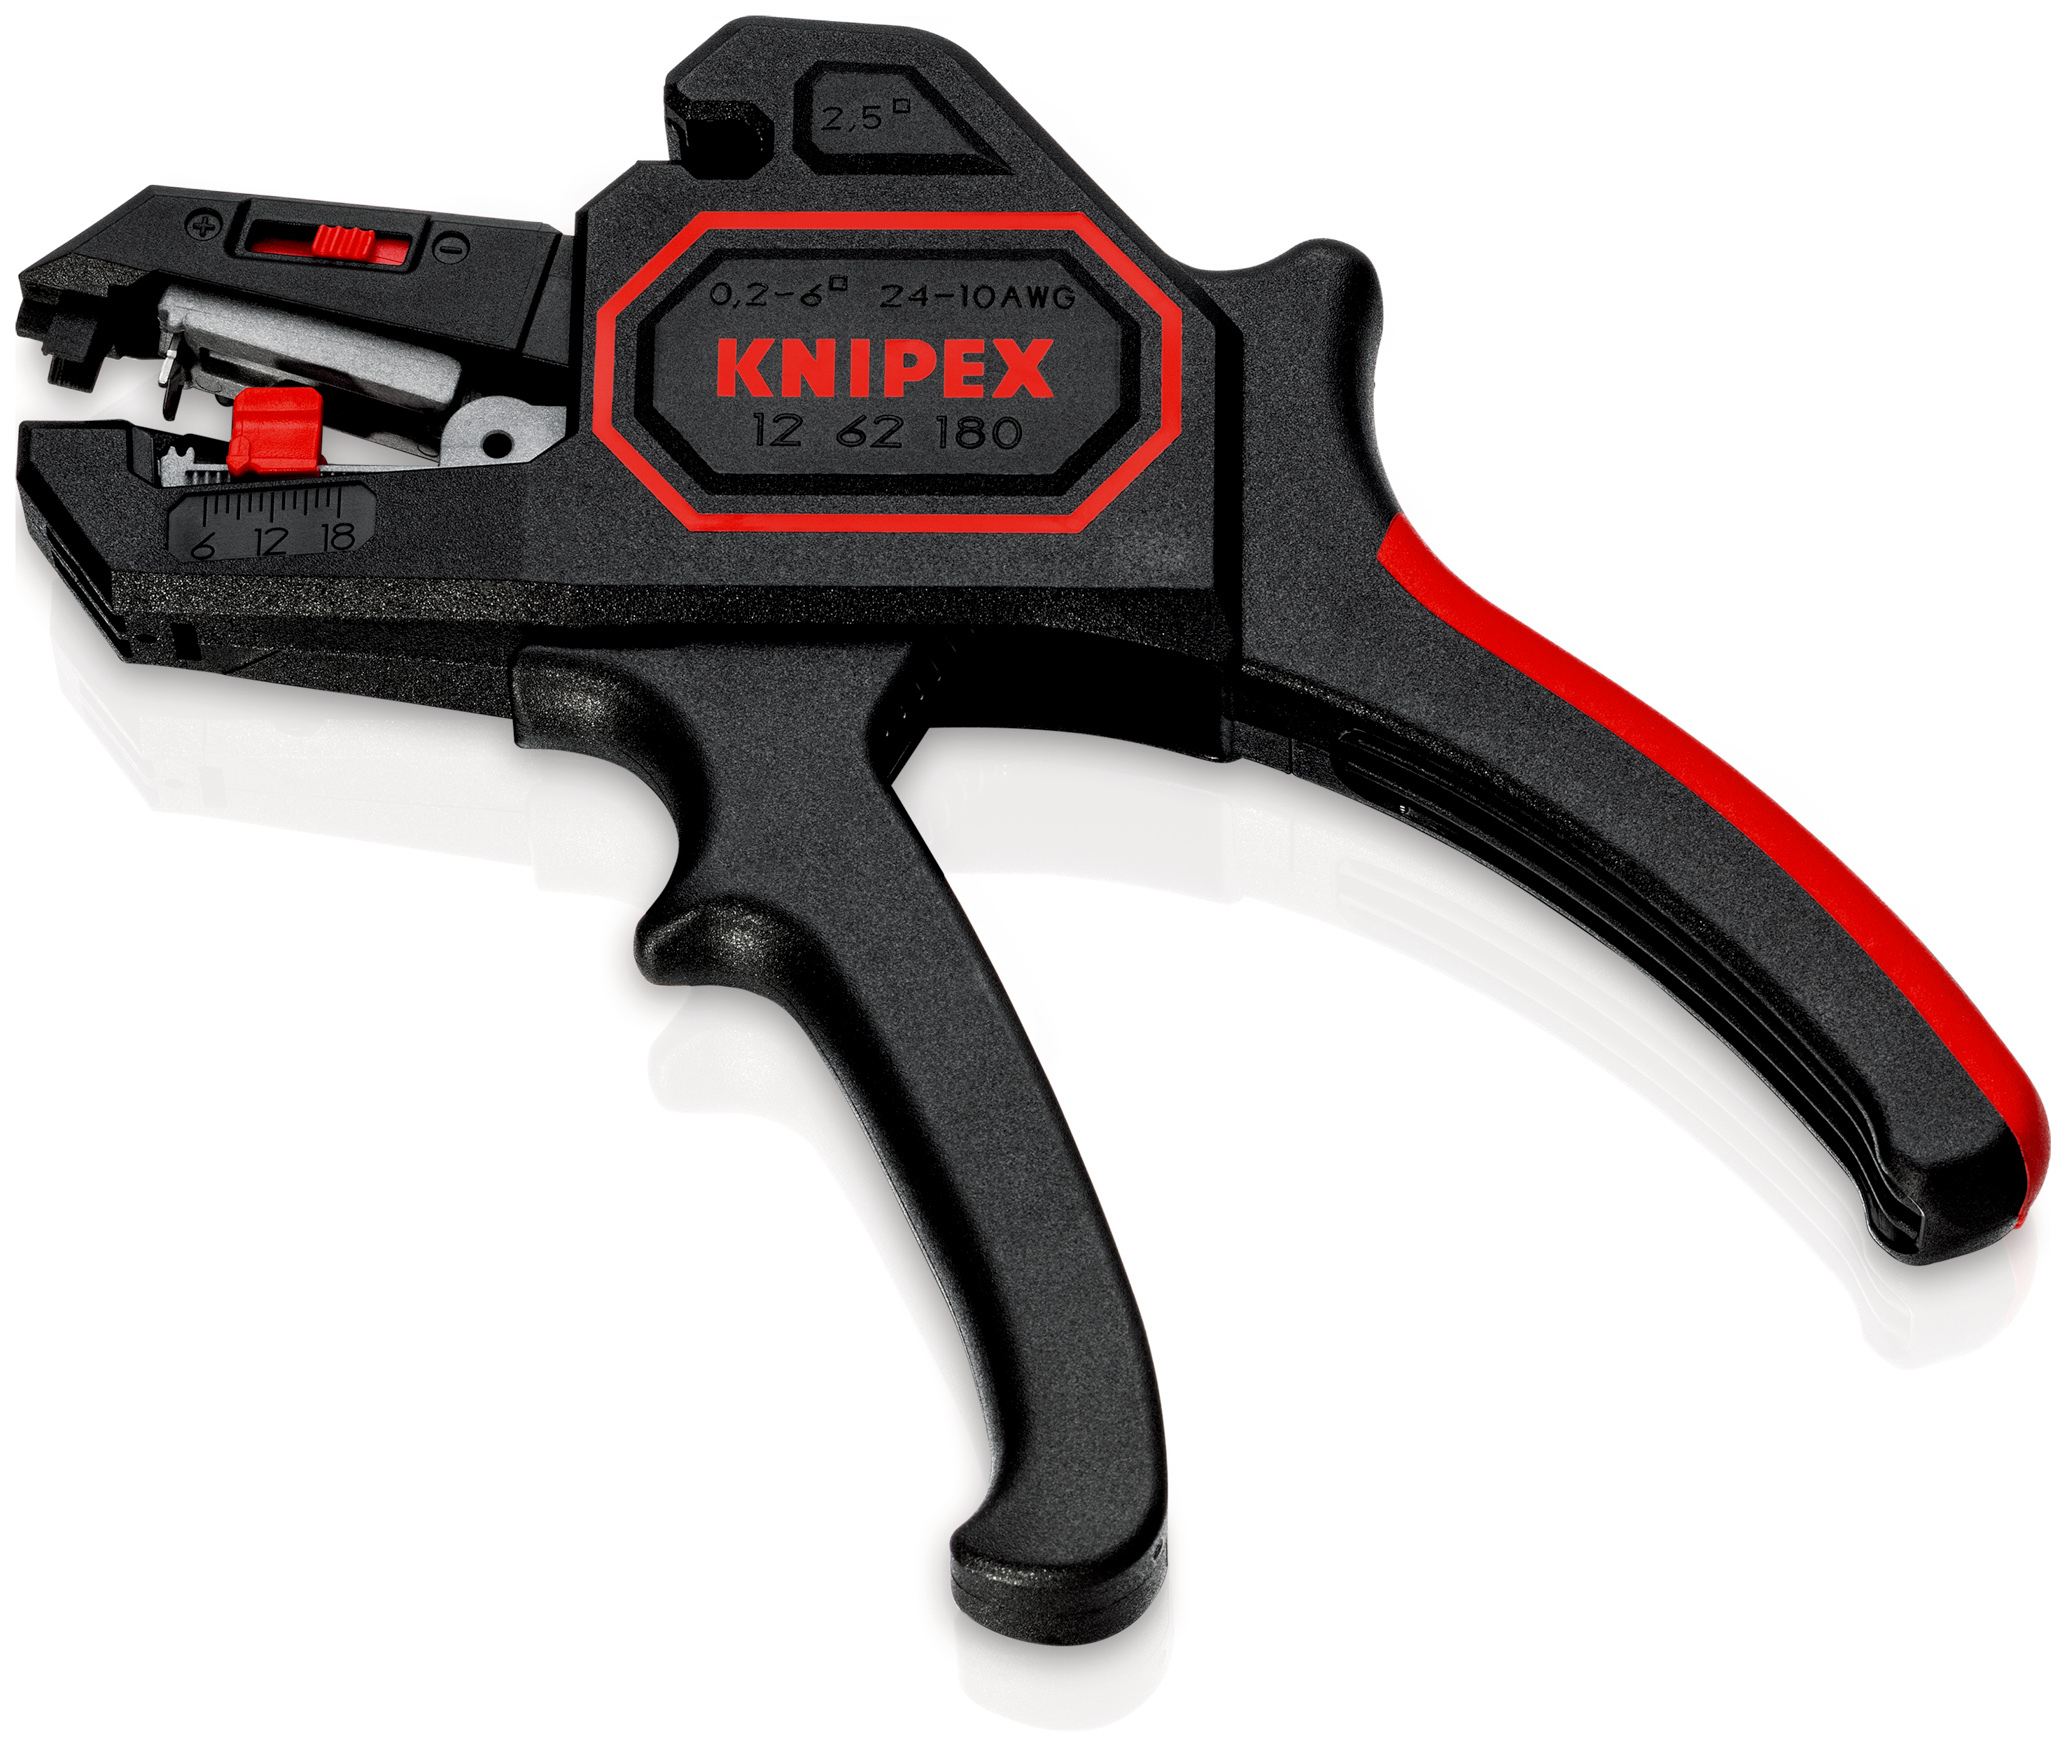 Pince a denuder automatique a reglage KNIPEX - 12 62 180